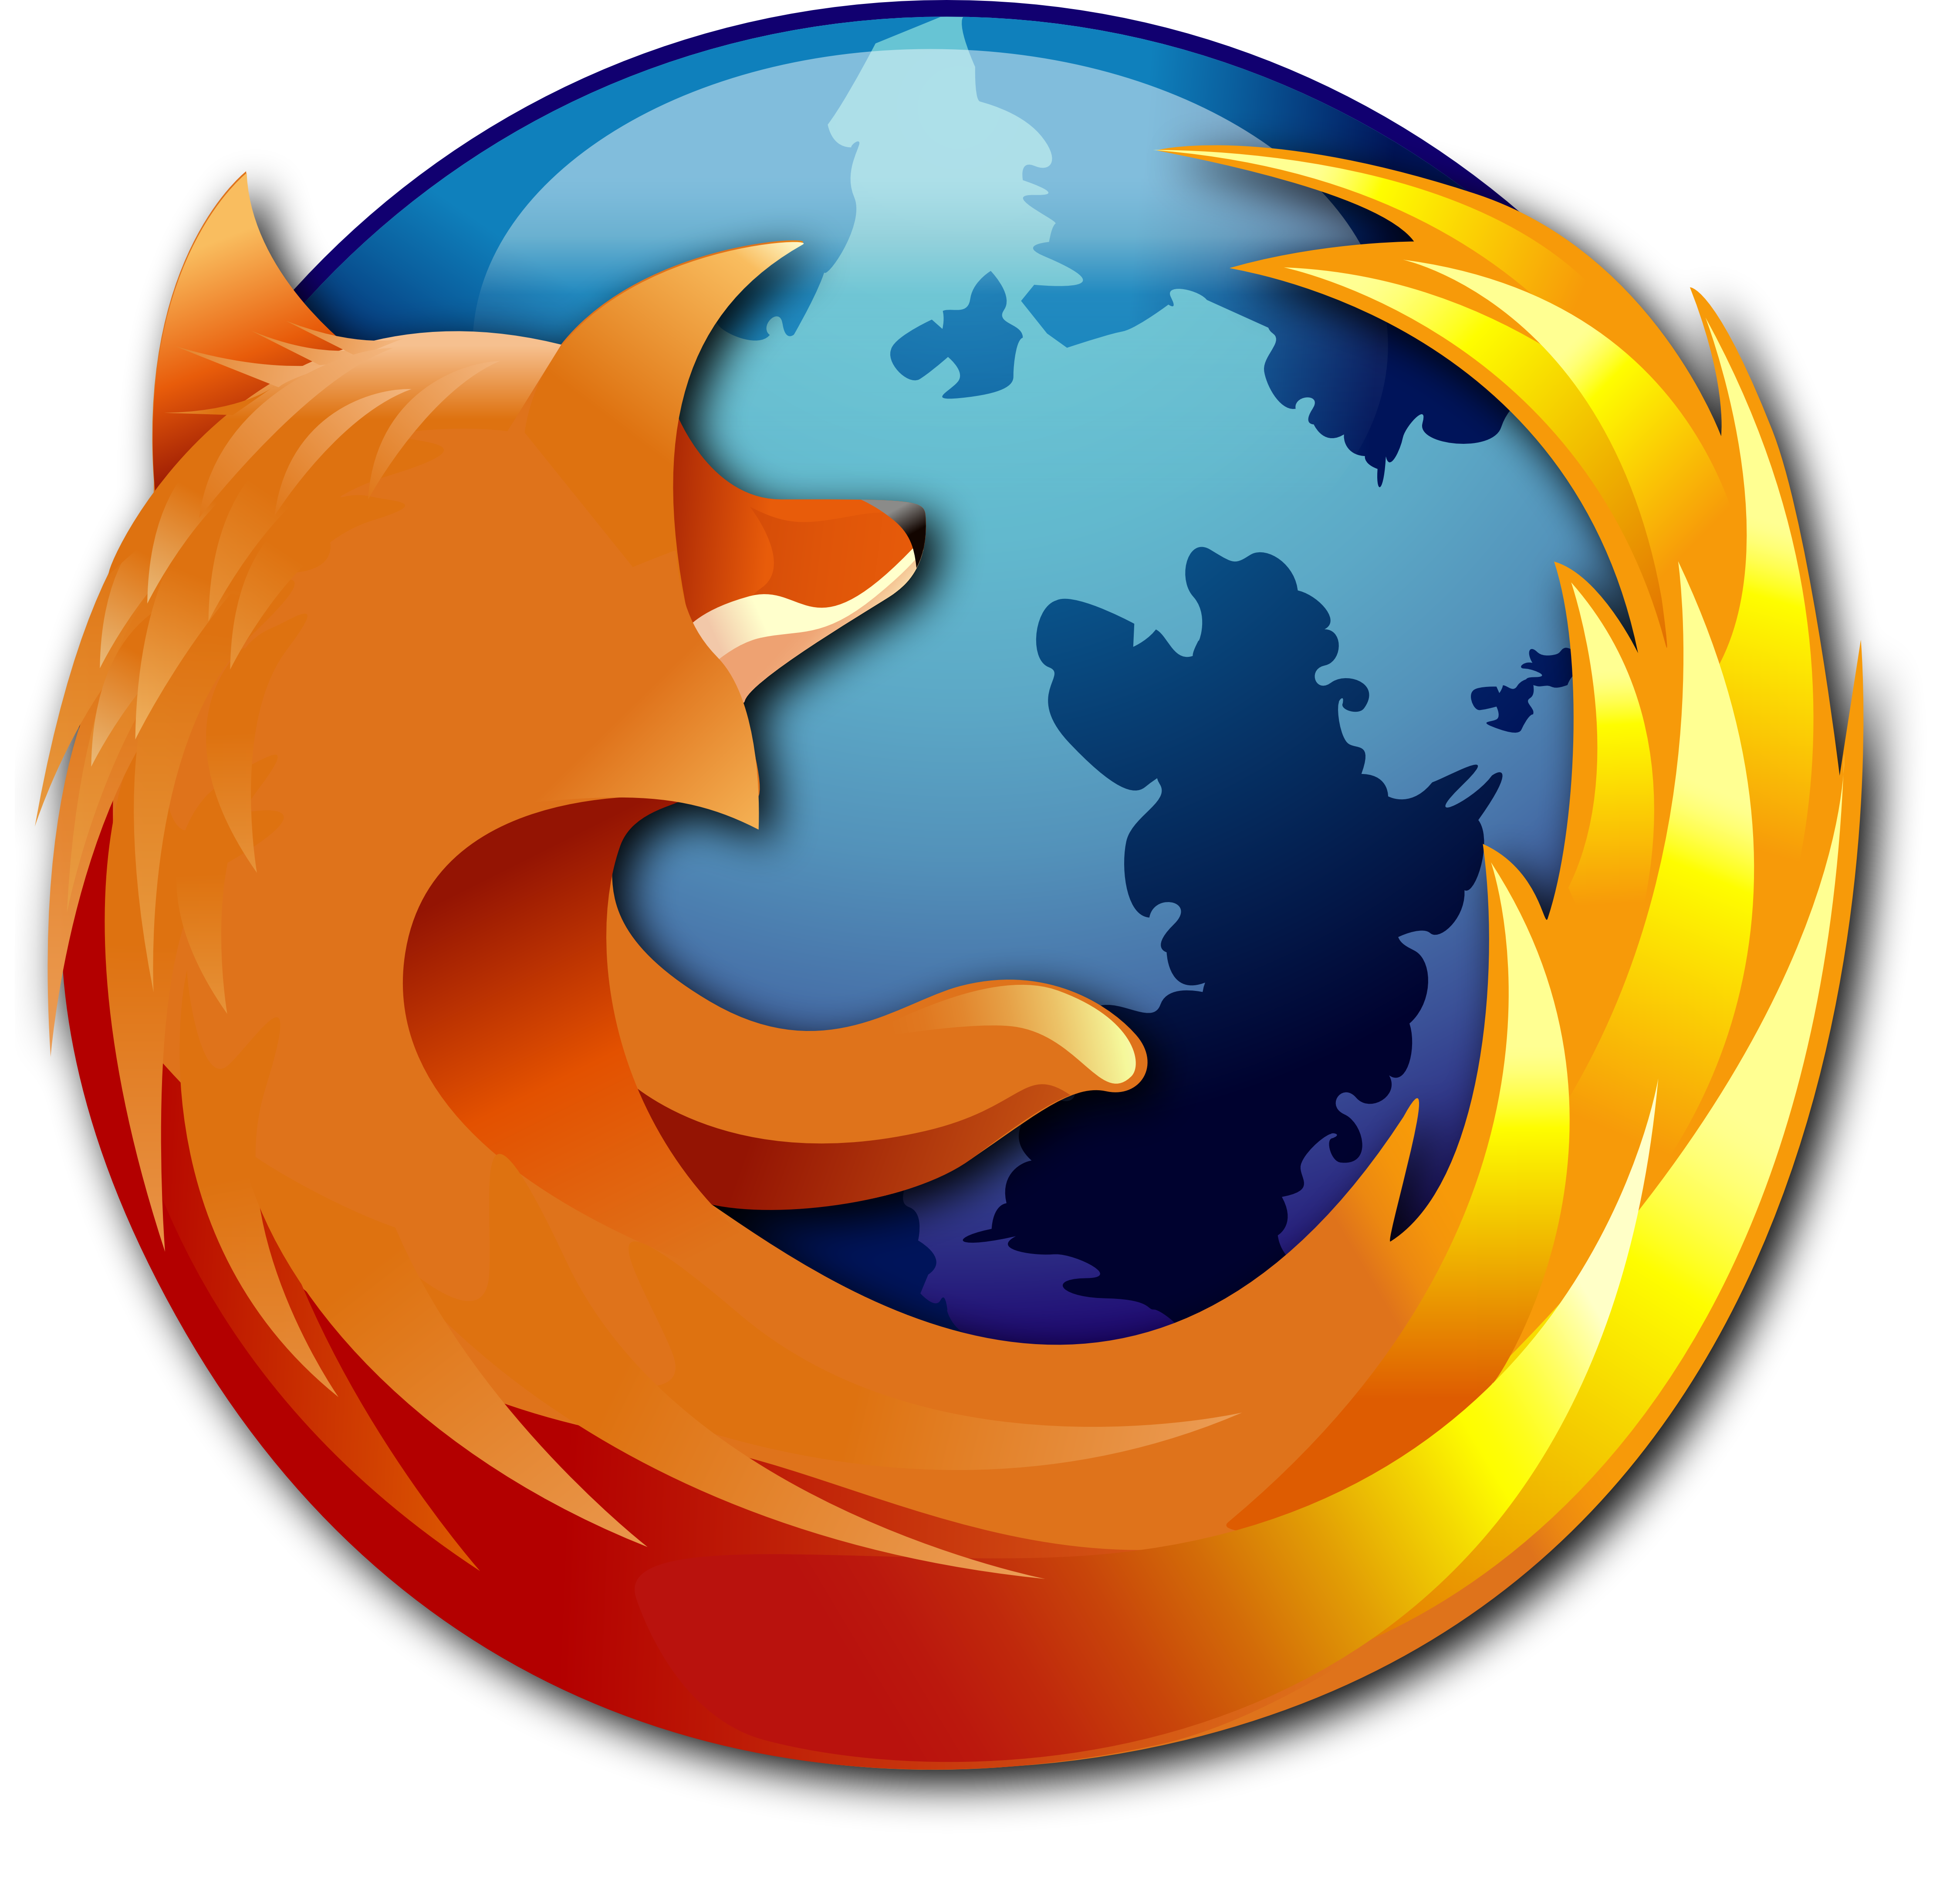 Firefox: 1,000,000,000 Downloads is not a Fish Tale